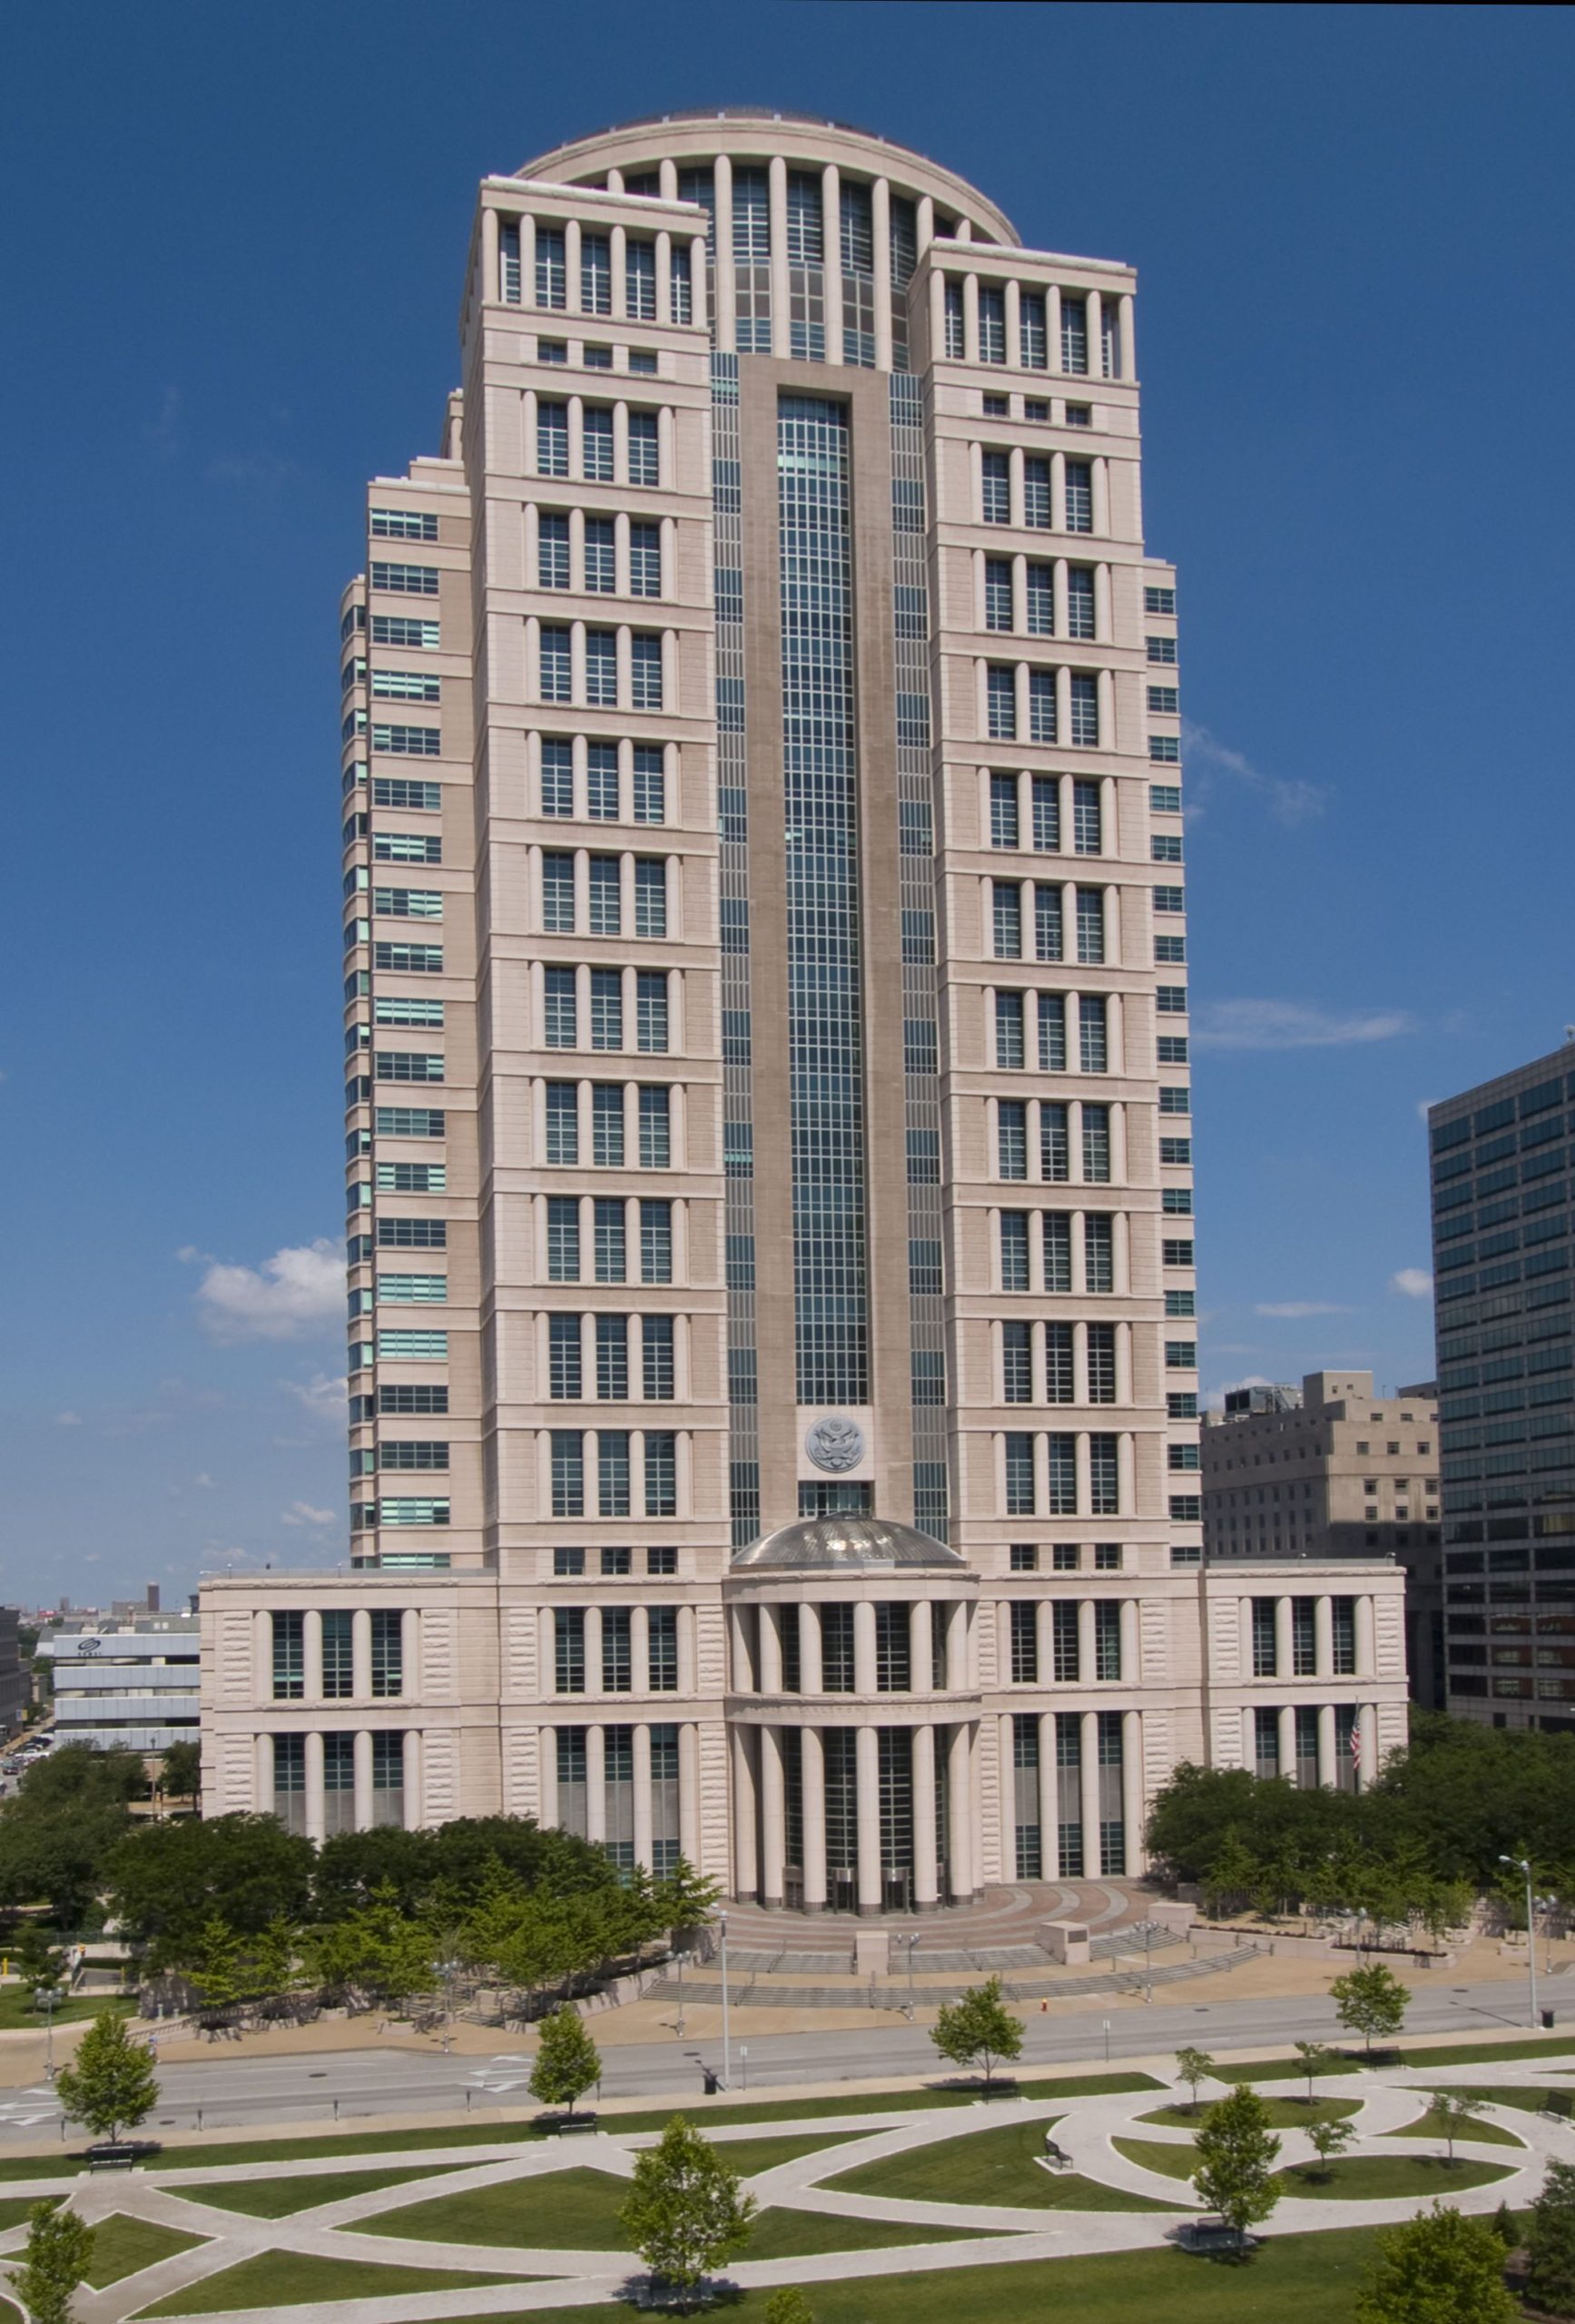 Federal Courthouse - St. Louis, Missouri